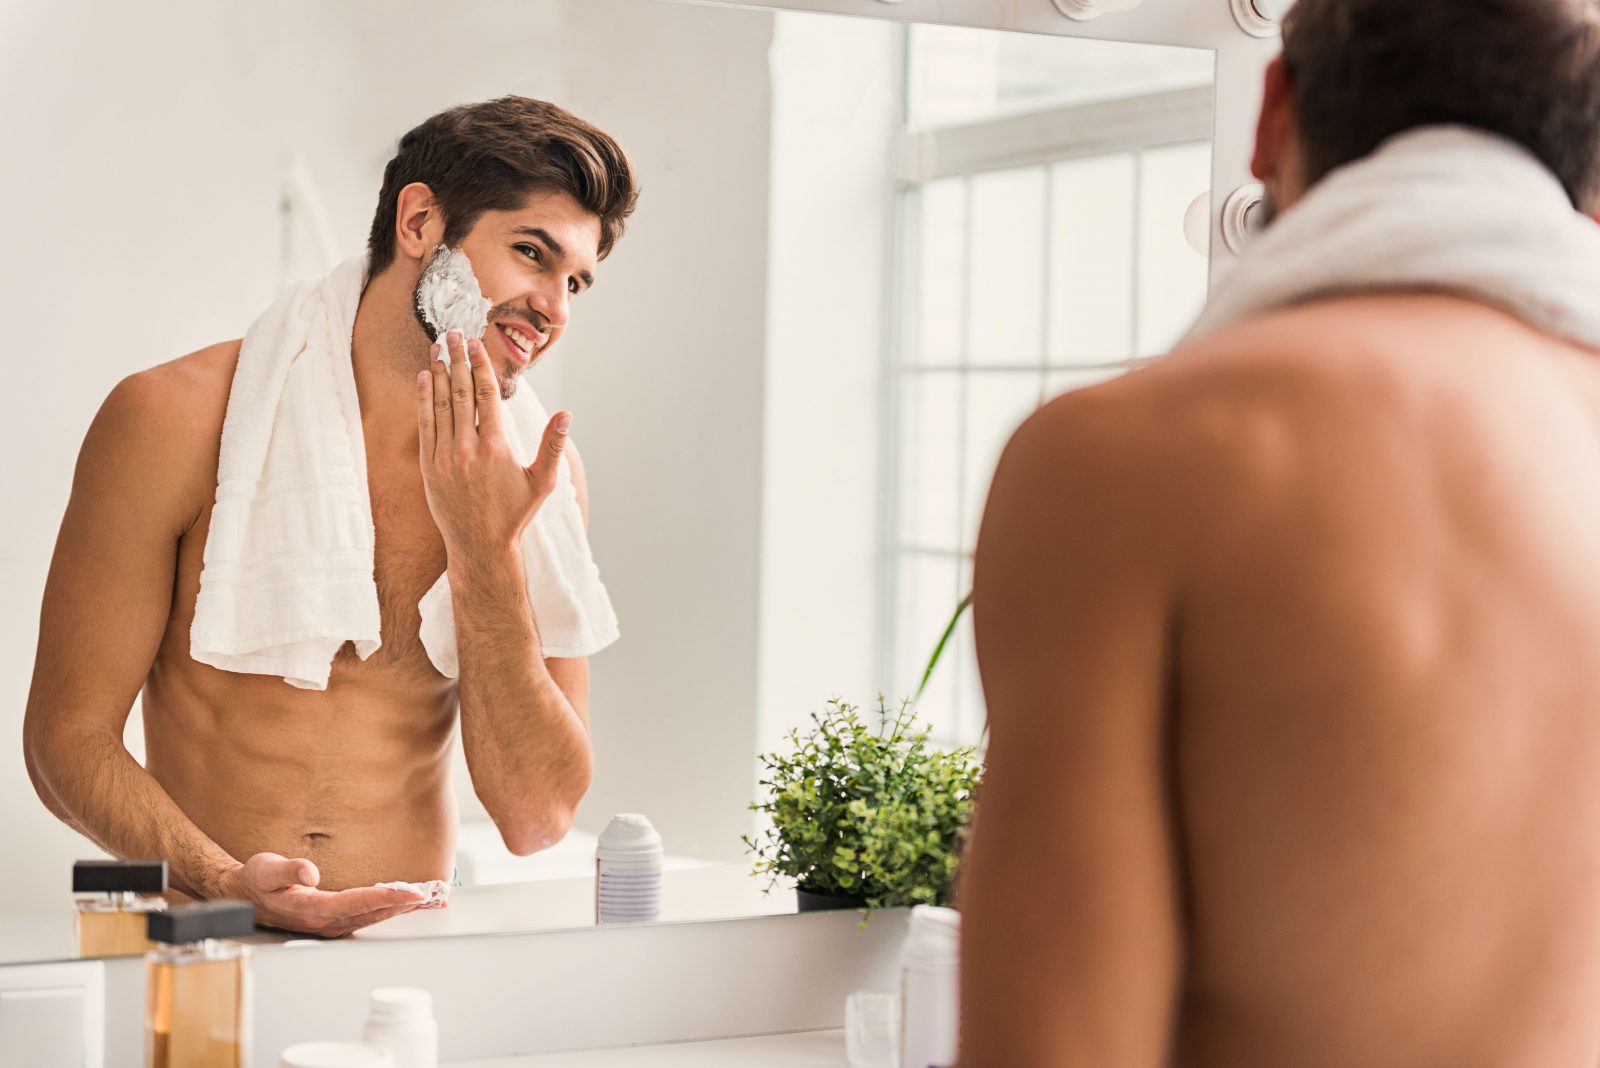 Man preparing to shave, wiping shaving cream on his beard